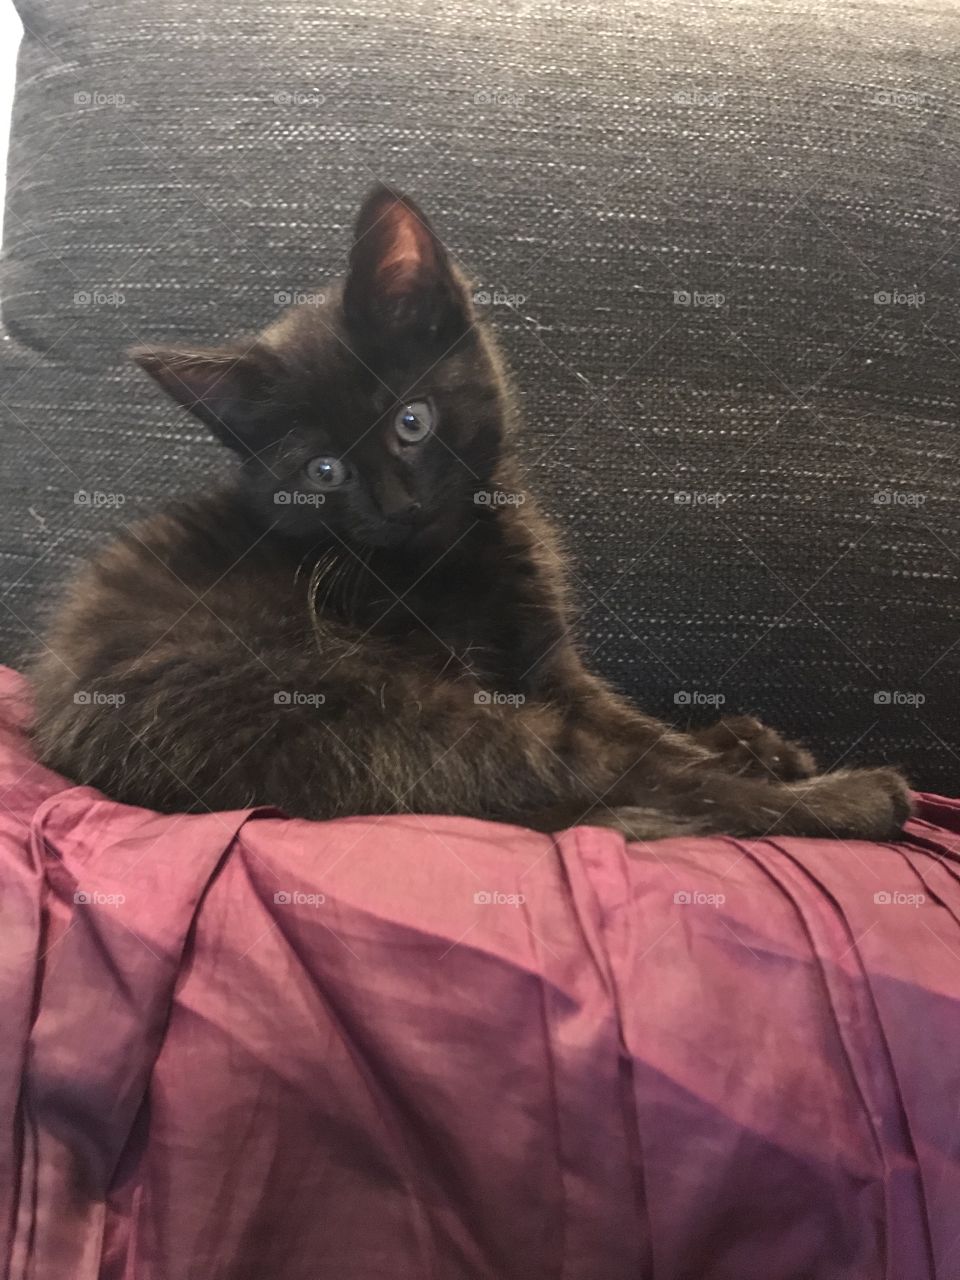 My tiny black kitten Luna.